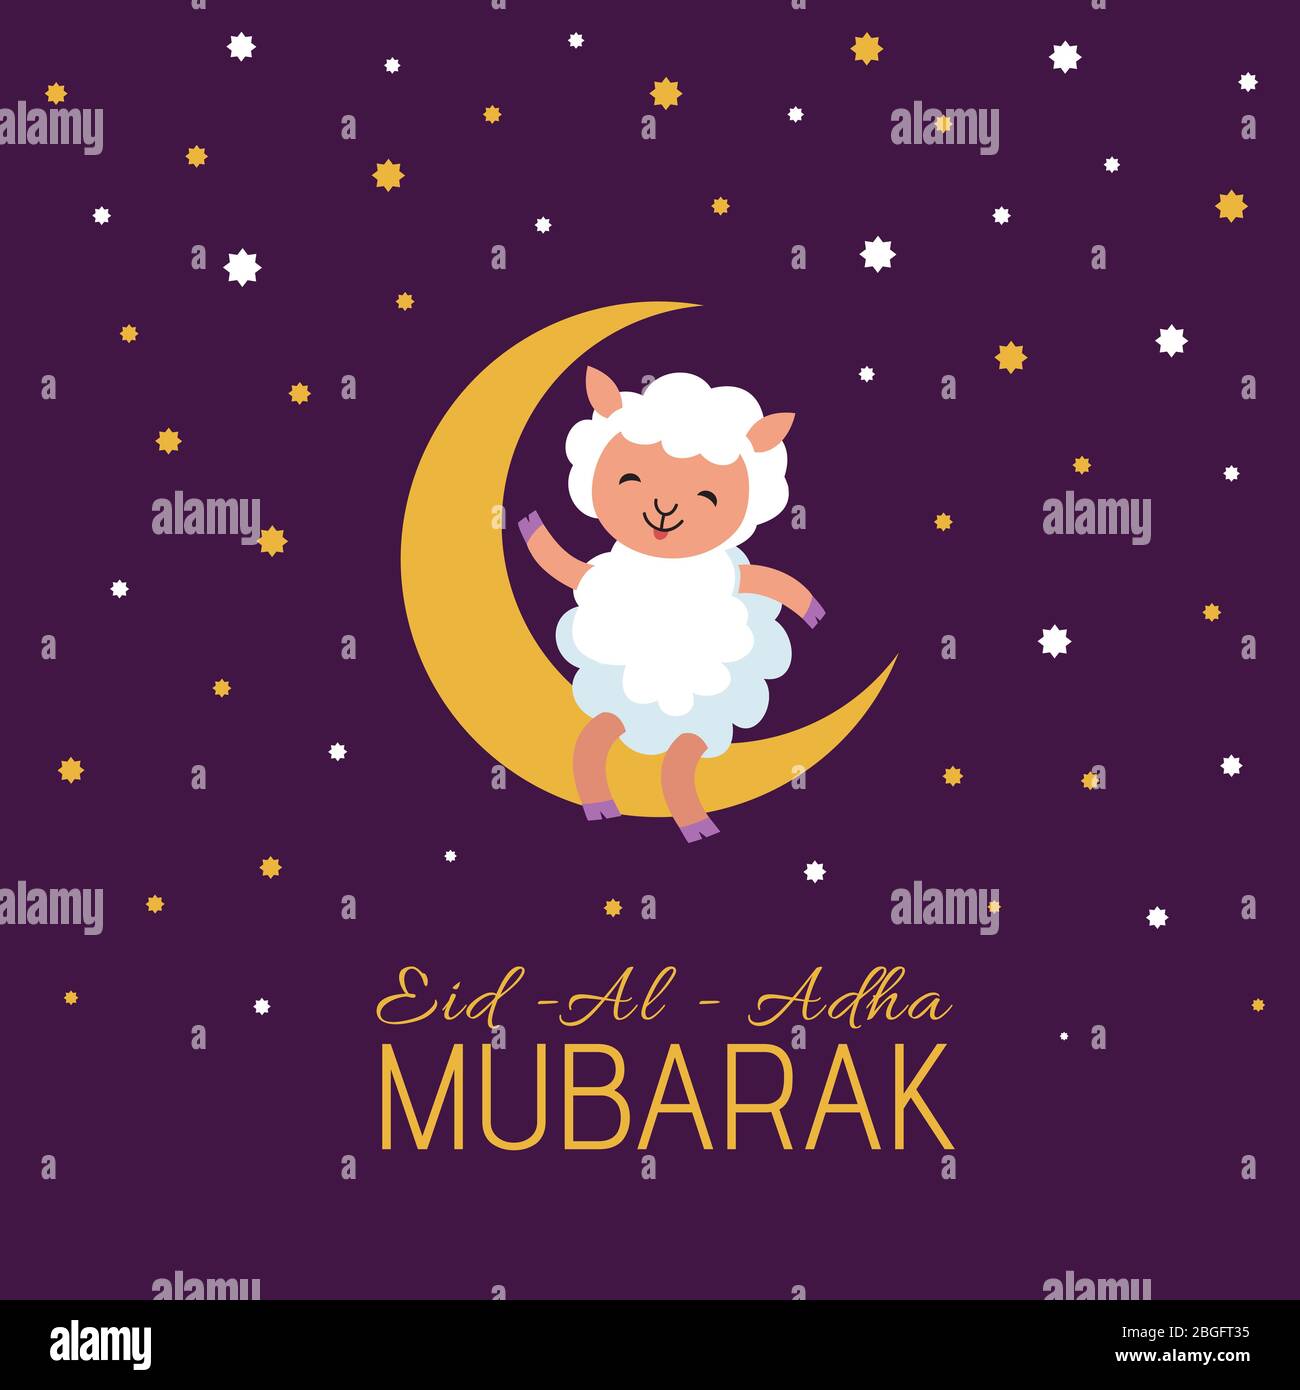 Eid mubarak arabian festival vector poster with cute cartoon sheep. Arabian religious banner,celebration eid-al-adha, mubarak illustration Stock Vector